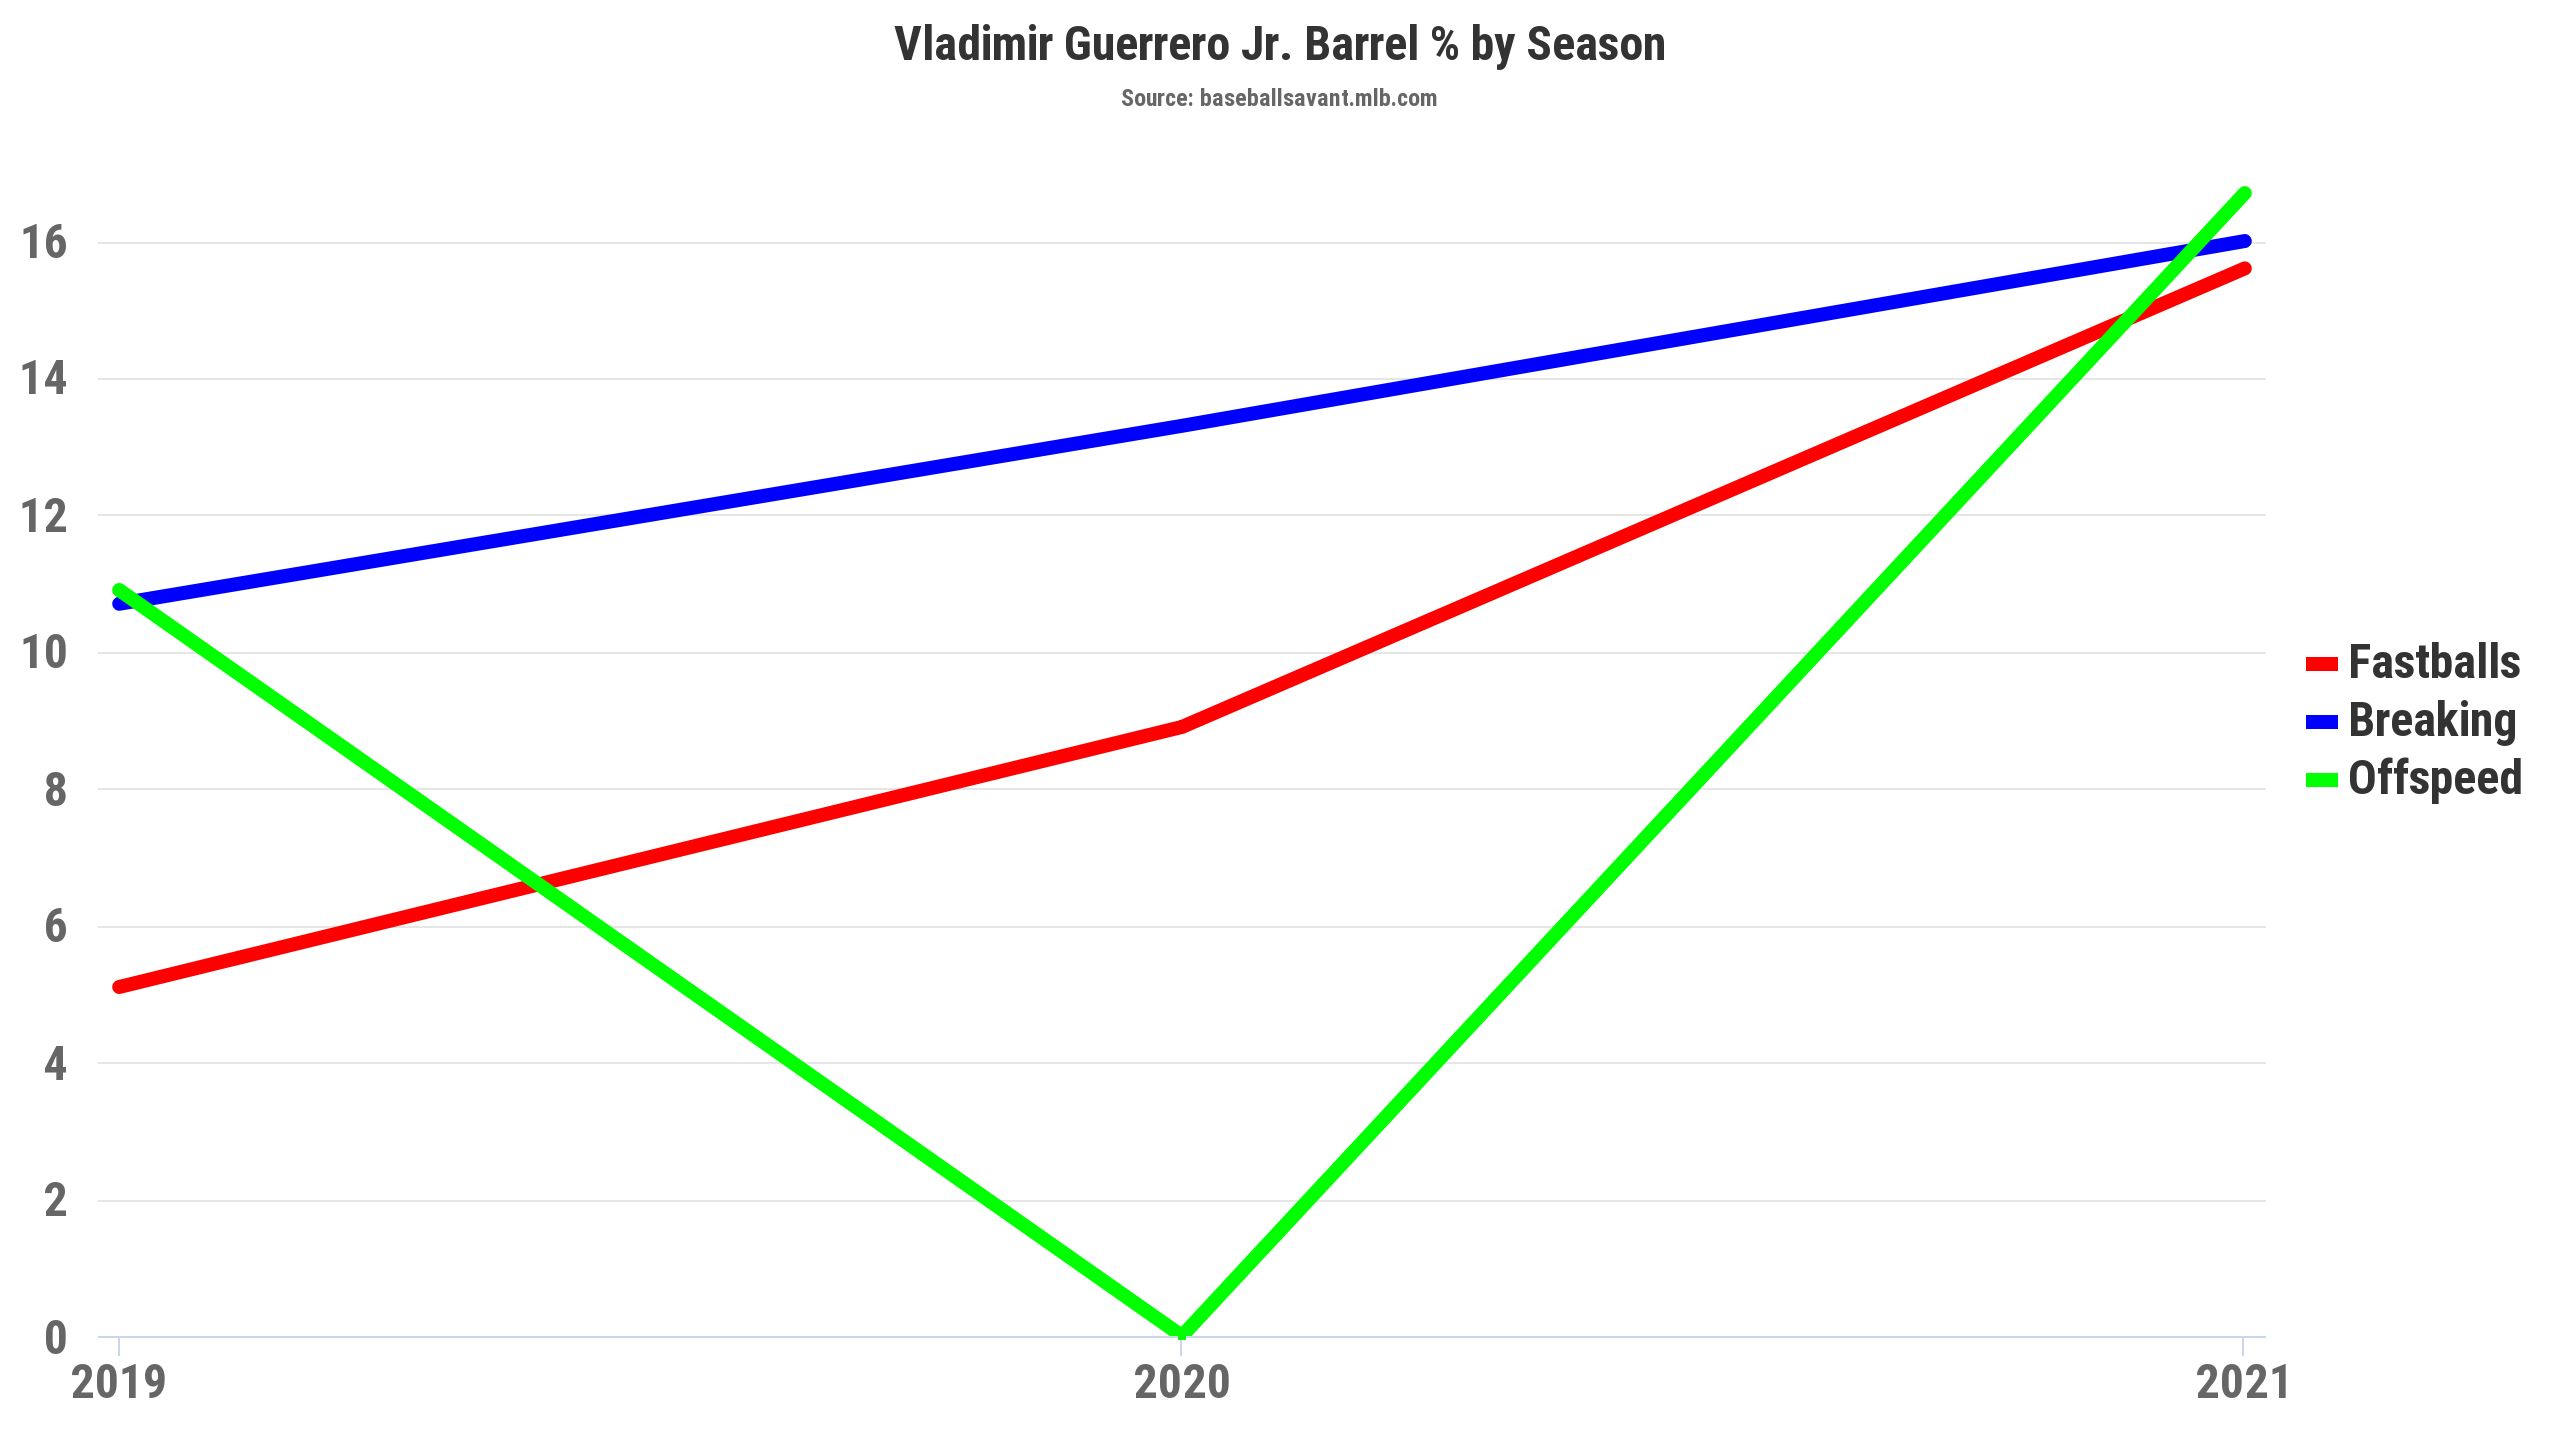 Vlad Jr. barrel rate by season